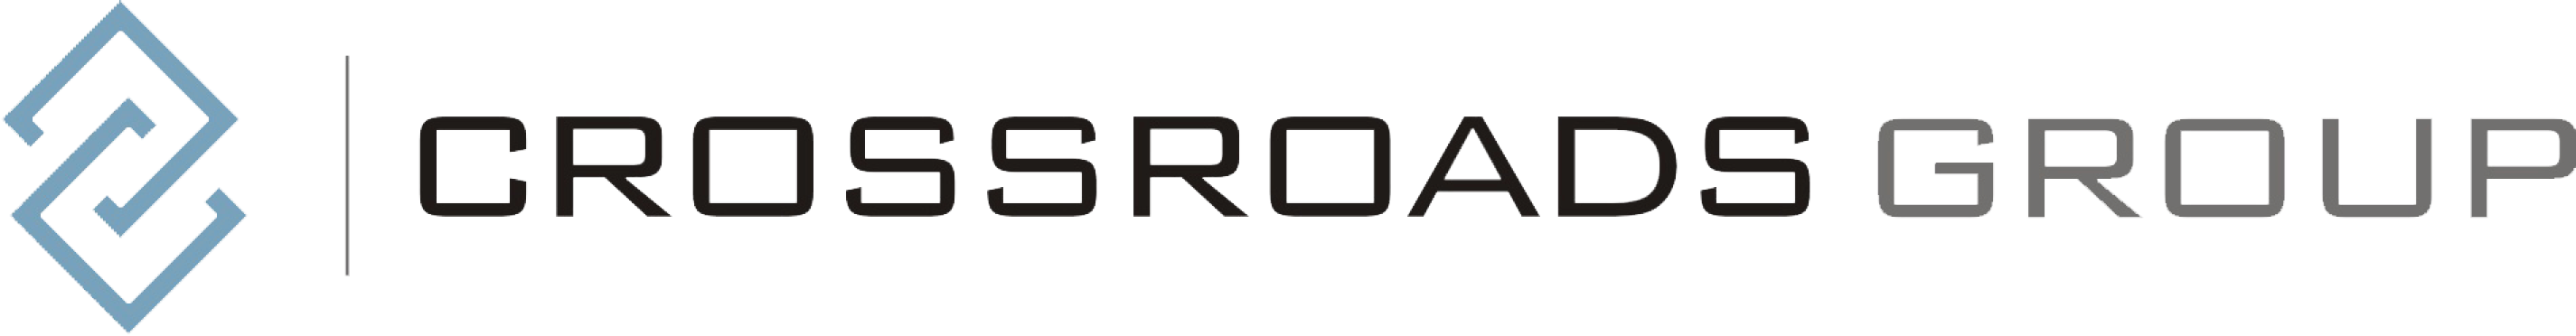 Crossroads Group Company Logo